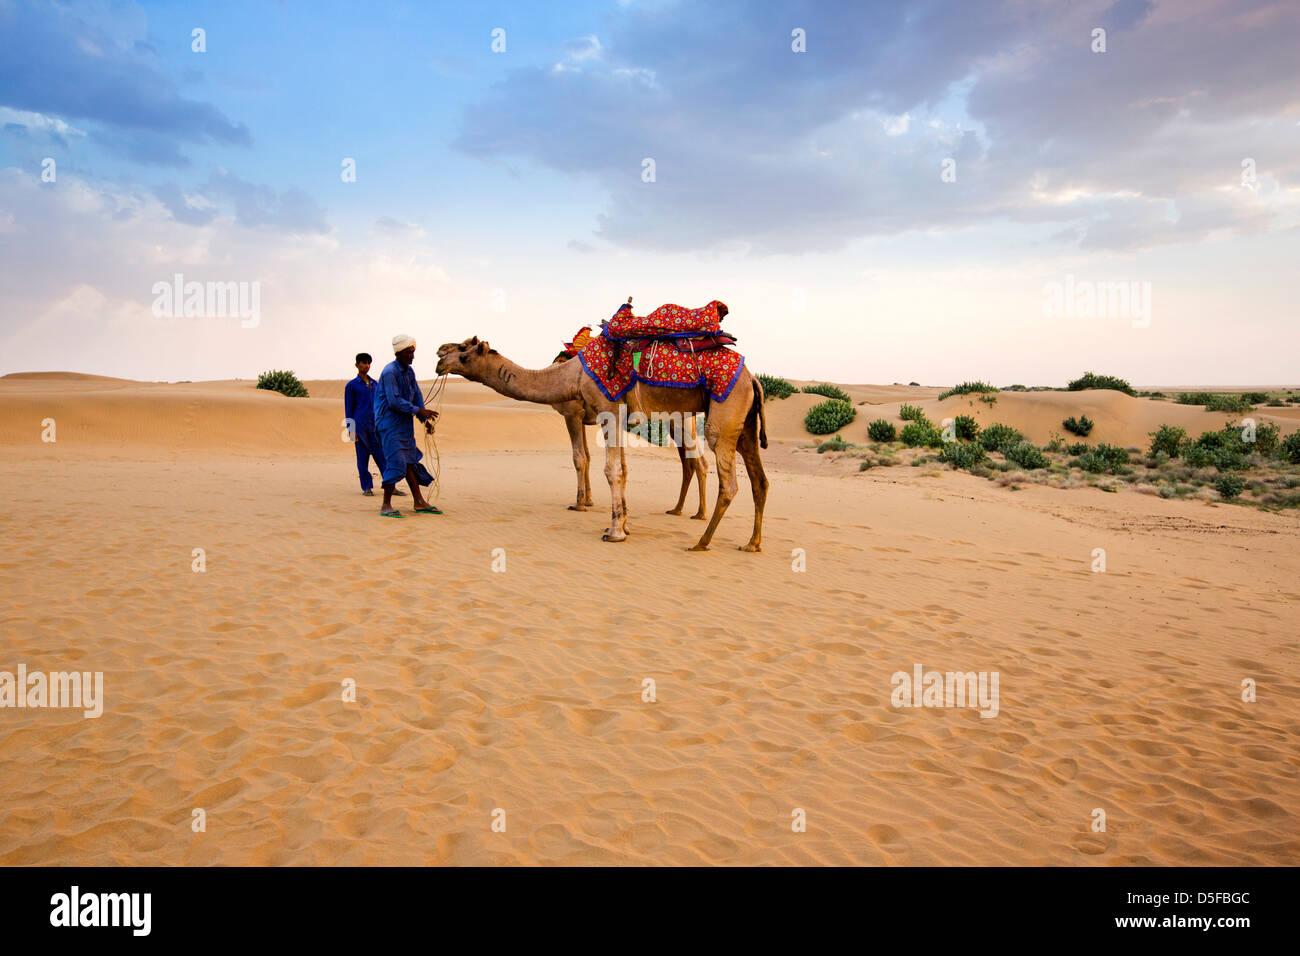 Two men standing with camels in a desert, Thar Desert, Jaisalmer, Rajasthan, India Stock Photo